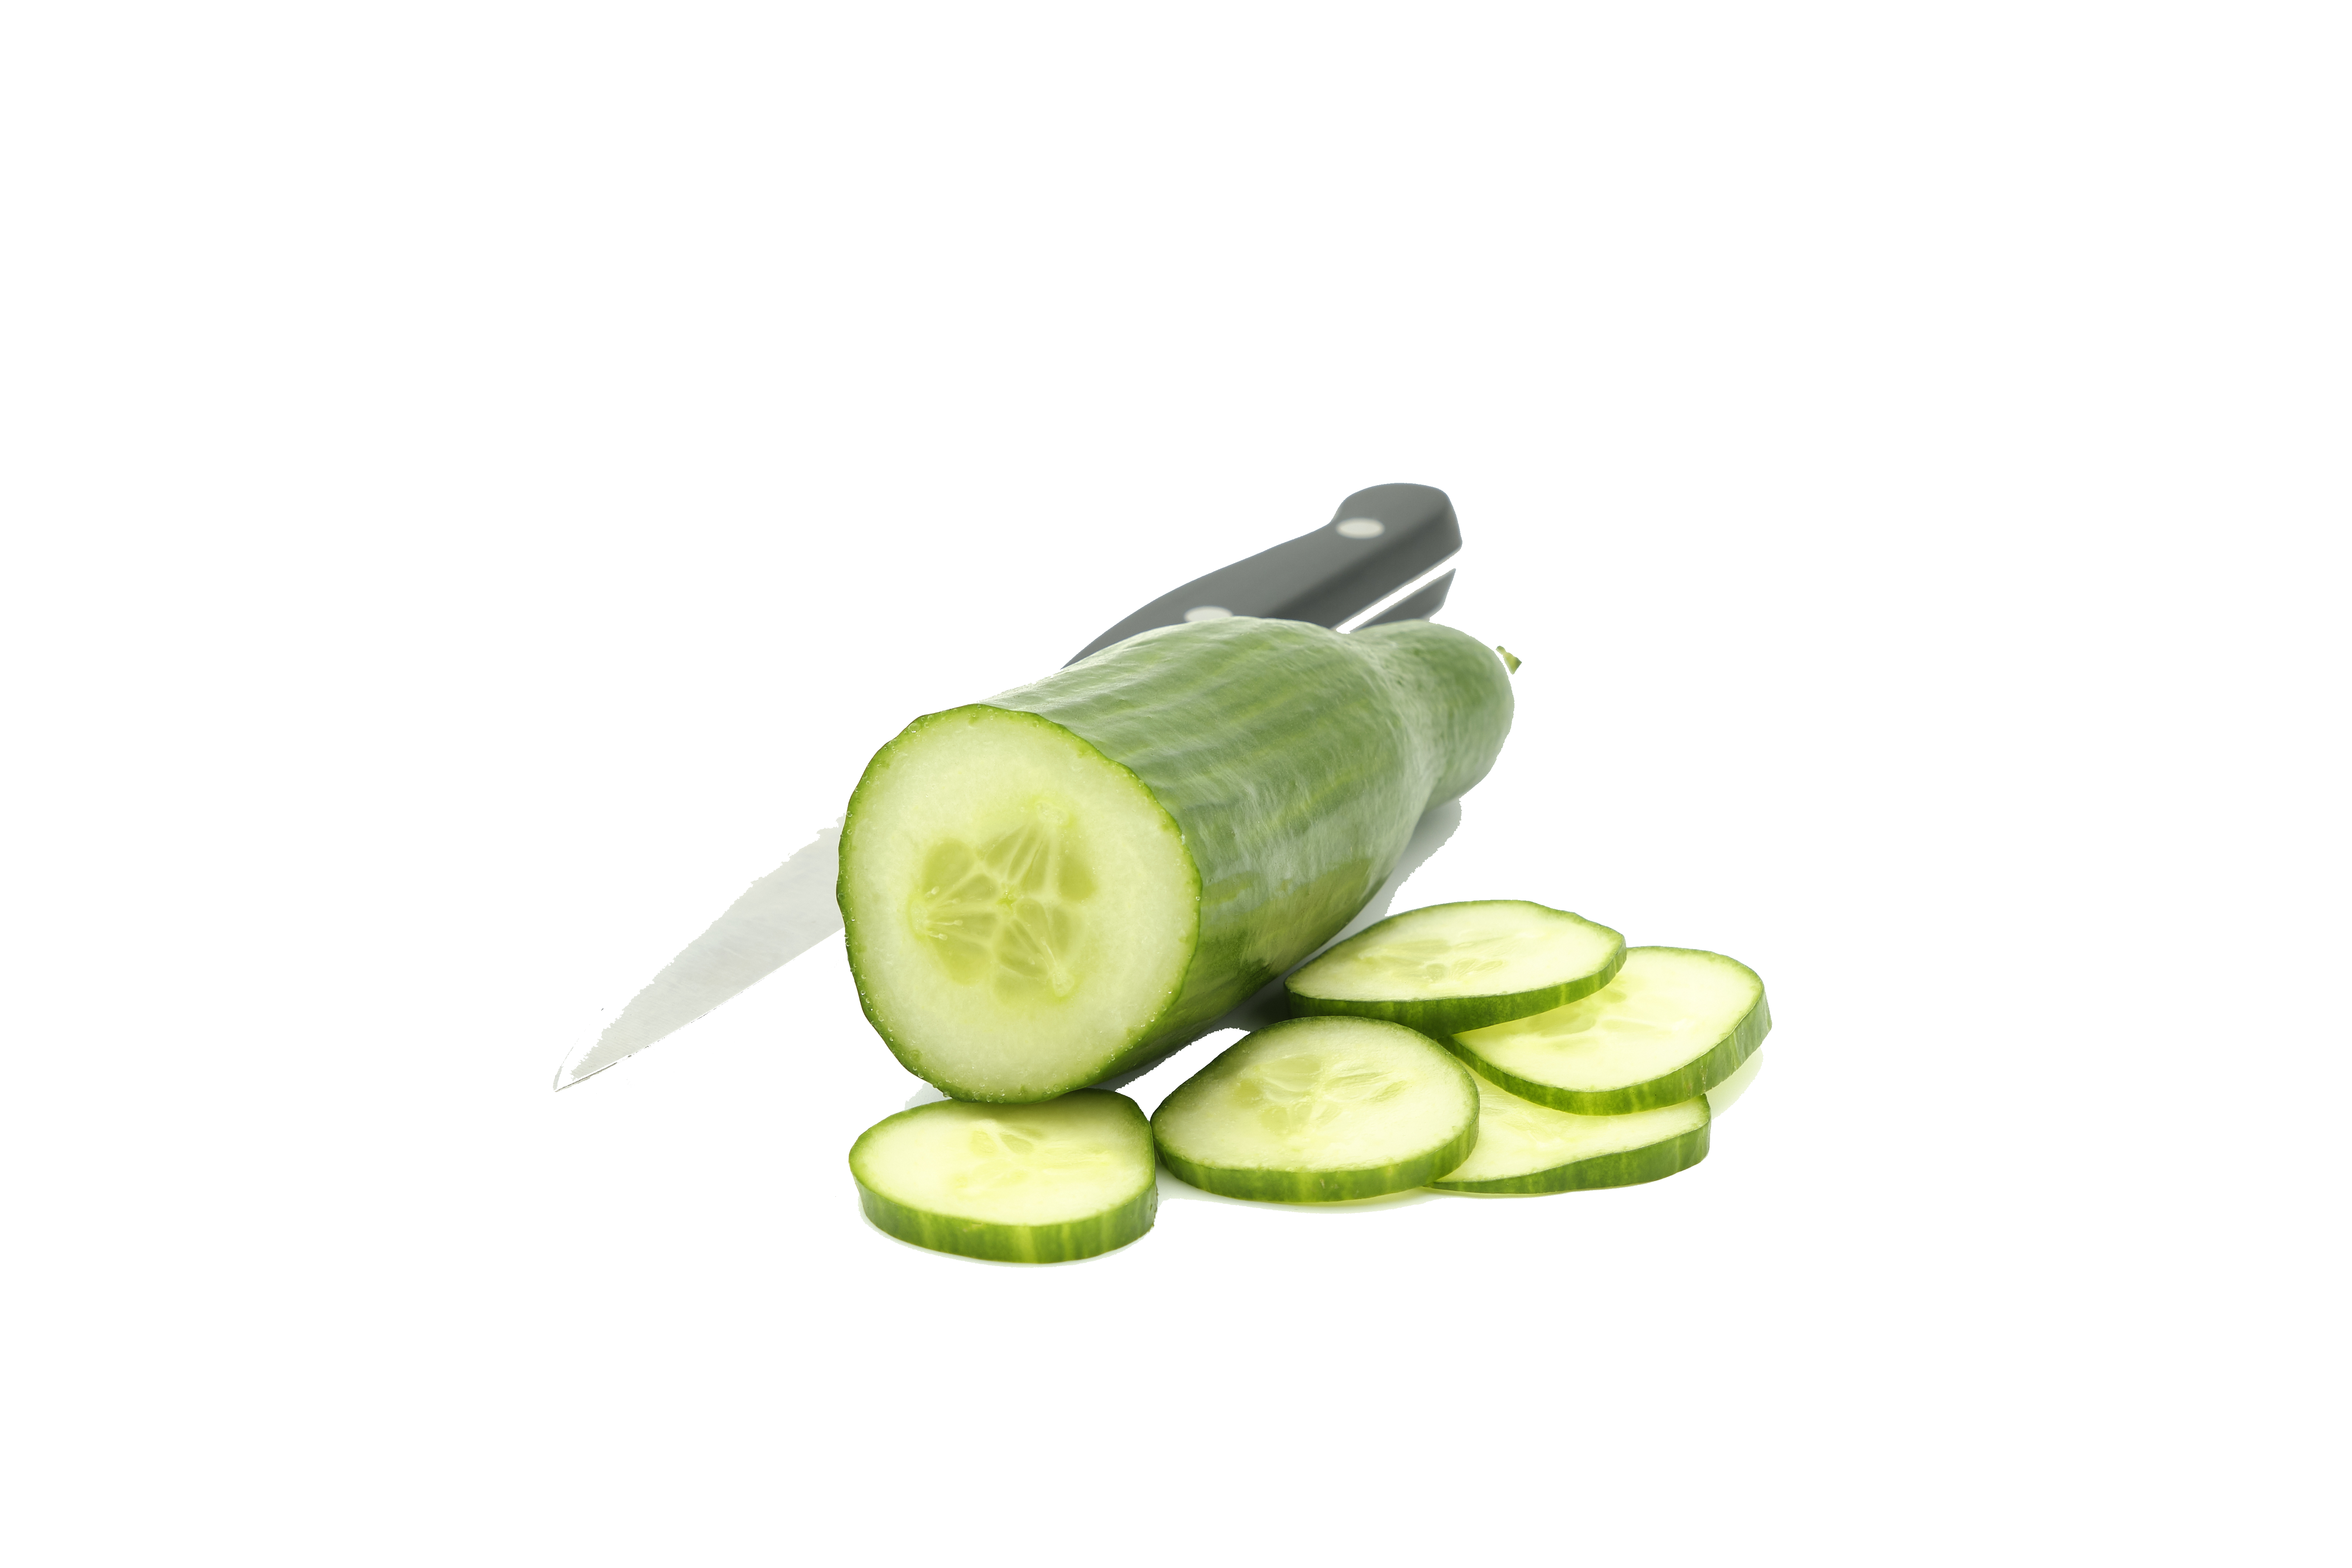 cucumber-and-knife-9ZQL229